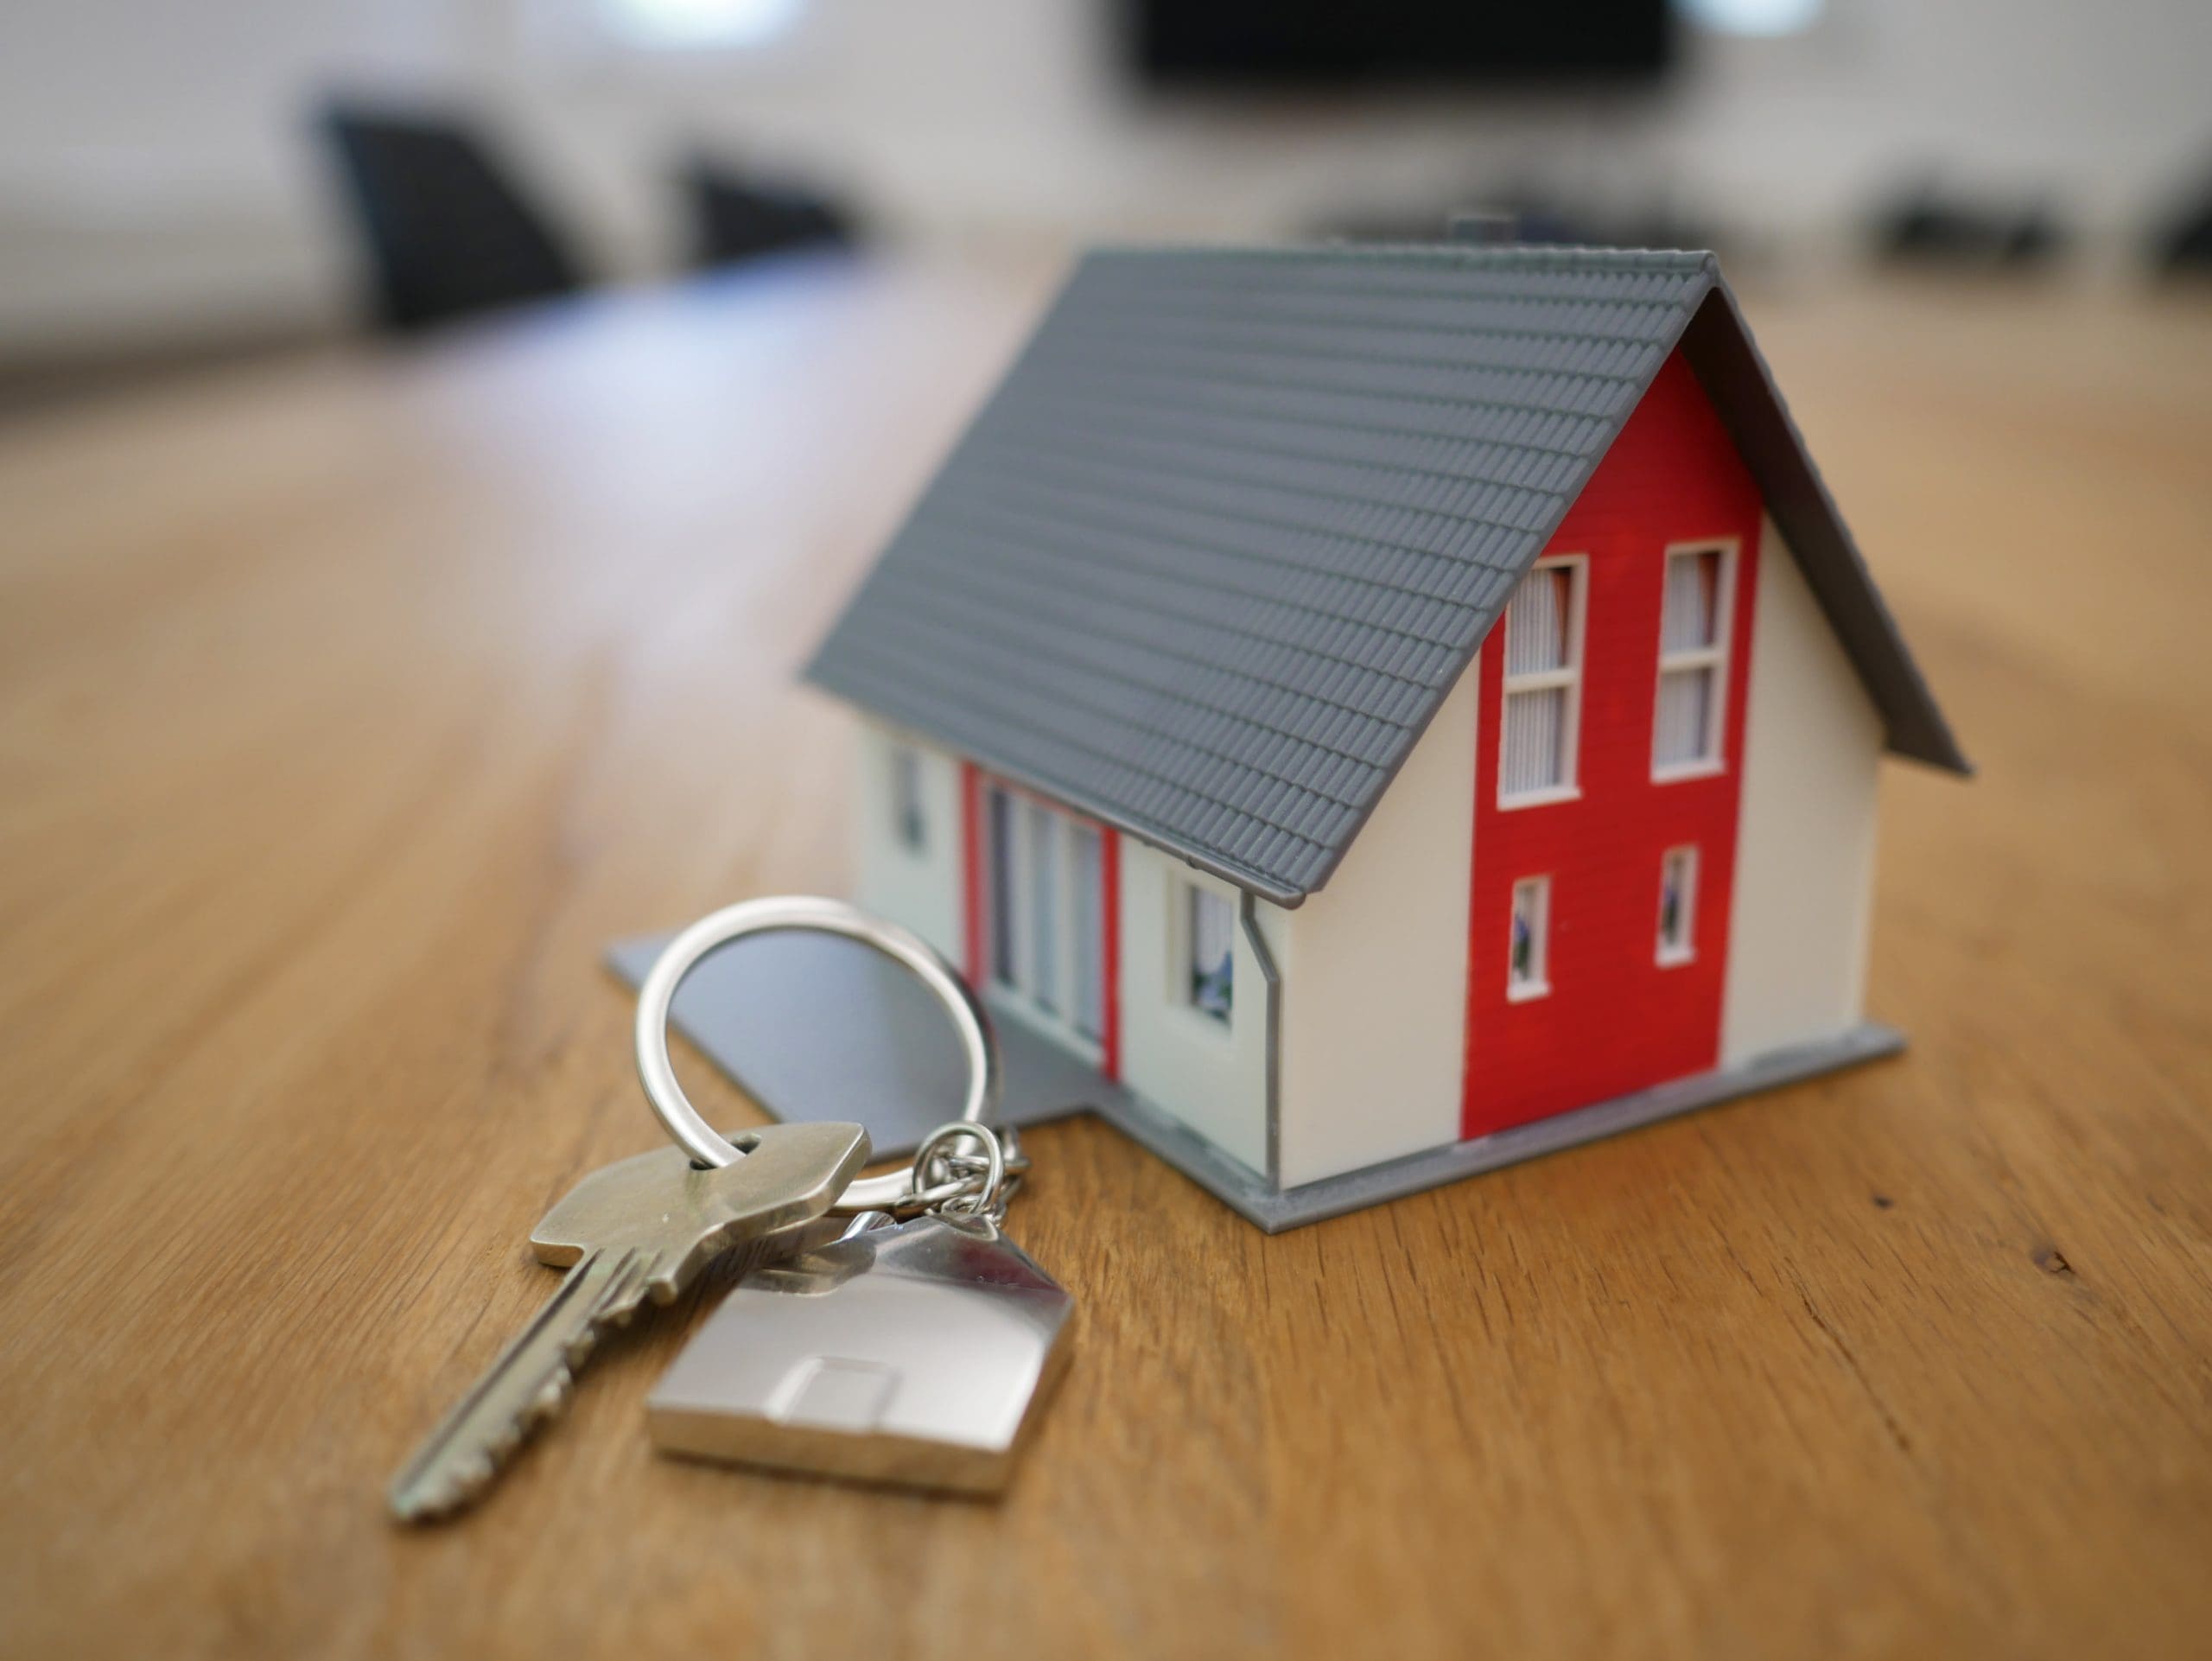 Miniature house with house keys on a table